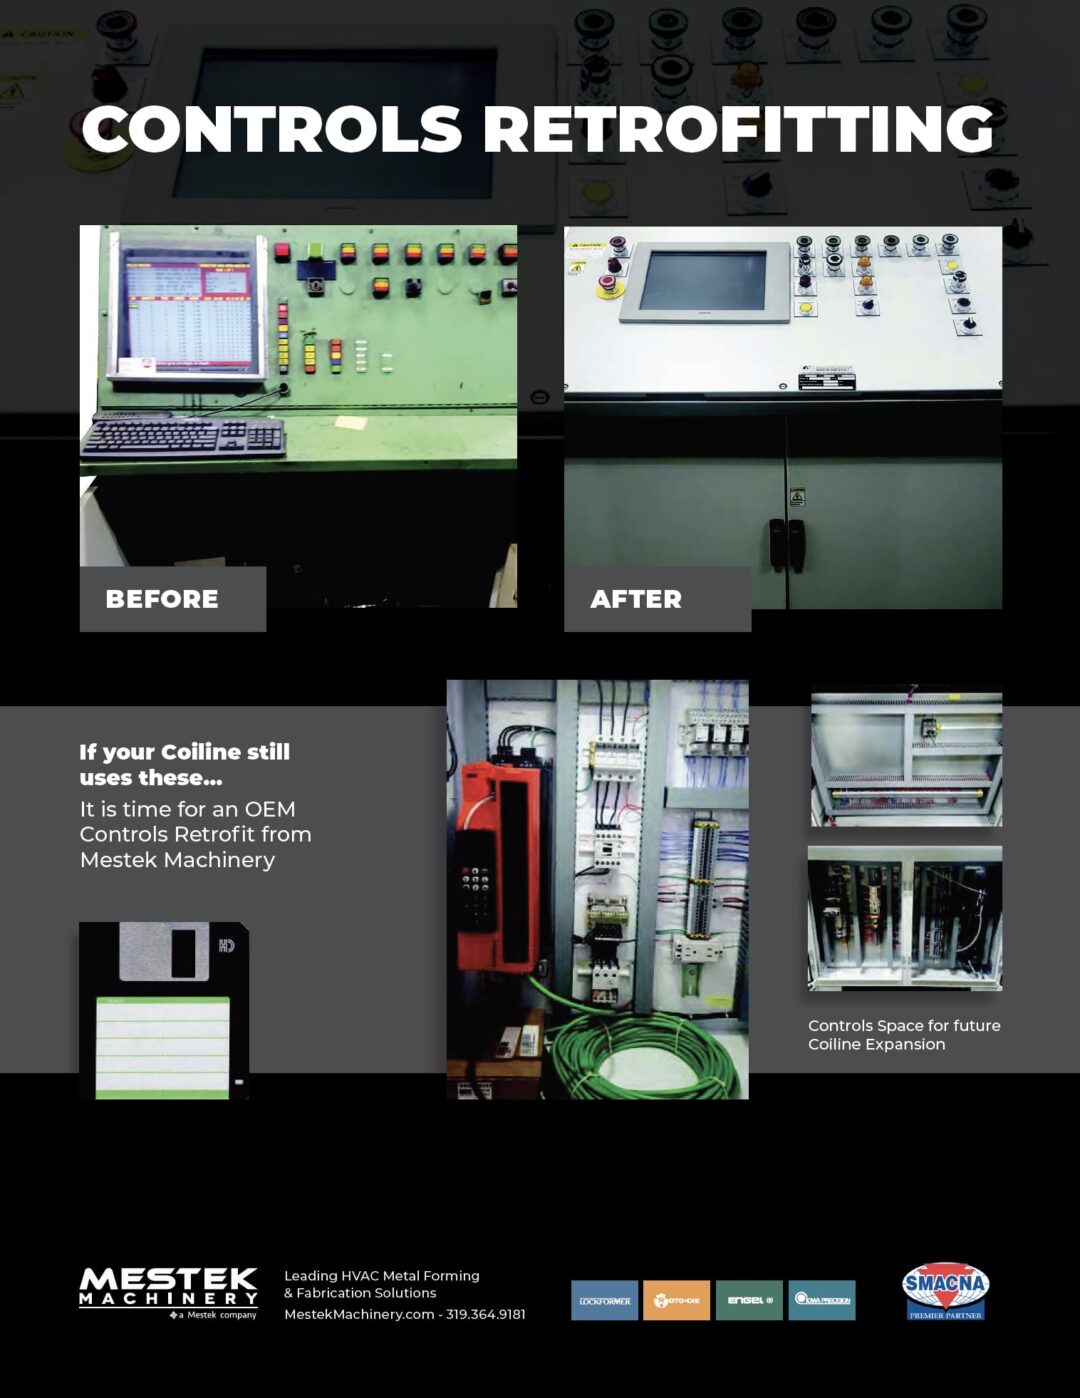 Brochure: Mestek Machinery Controls Retrofitting Program